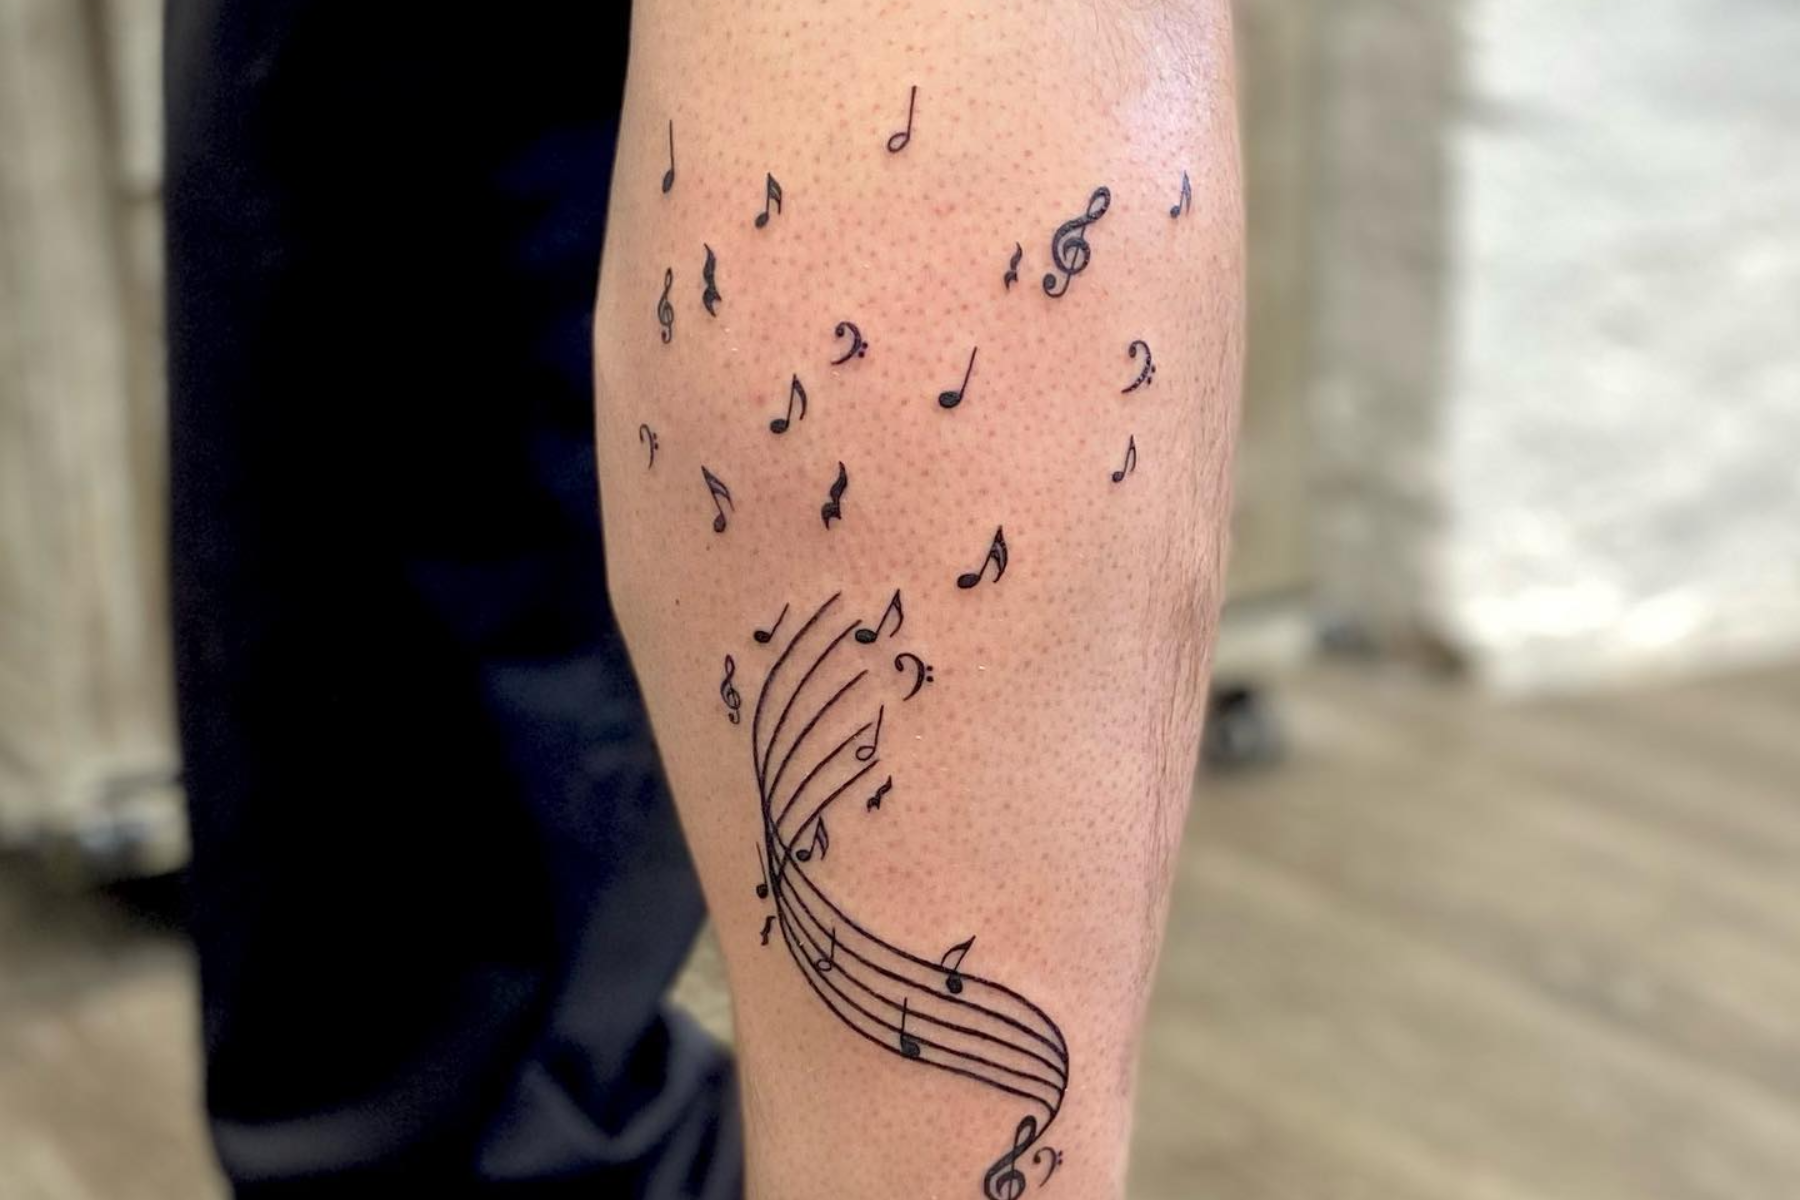 Musical Note Tattoo - Best Tattoo Ideas Gallery